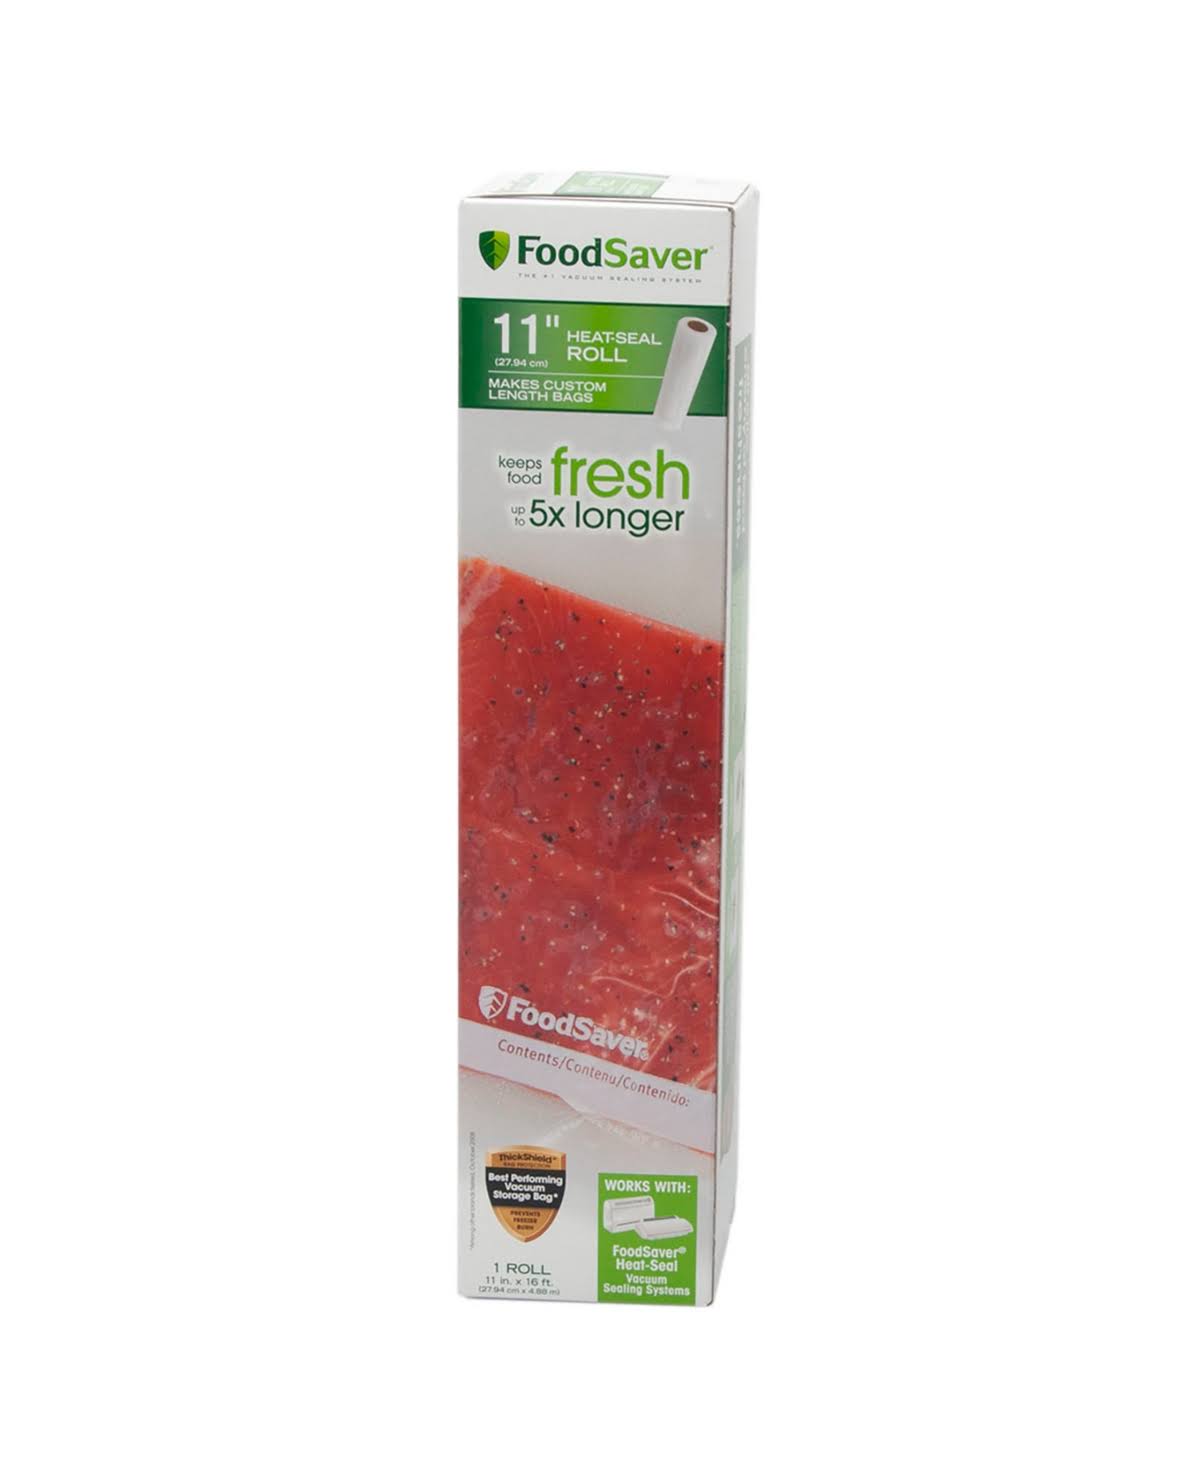 Foodsaver Heat-seal Roll - 11"